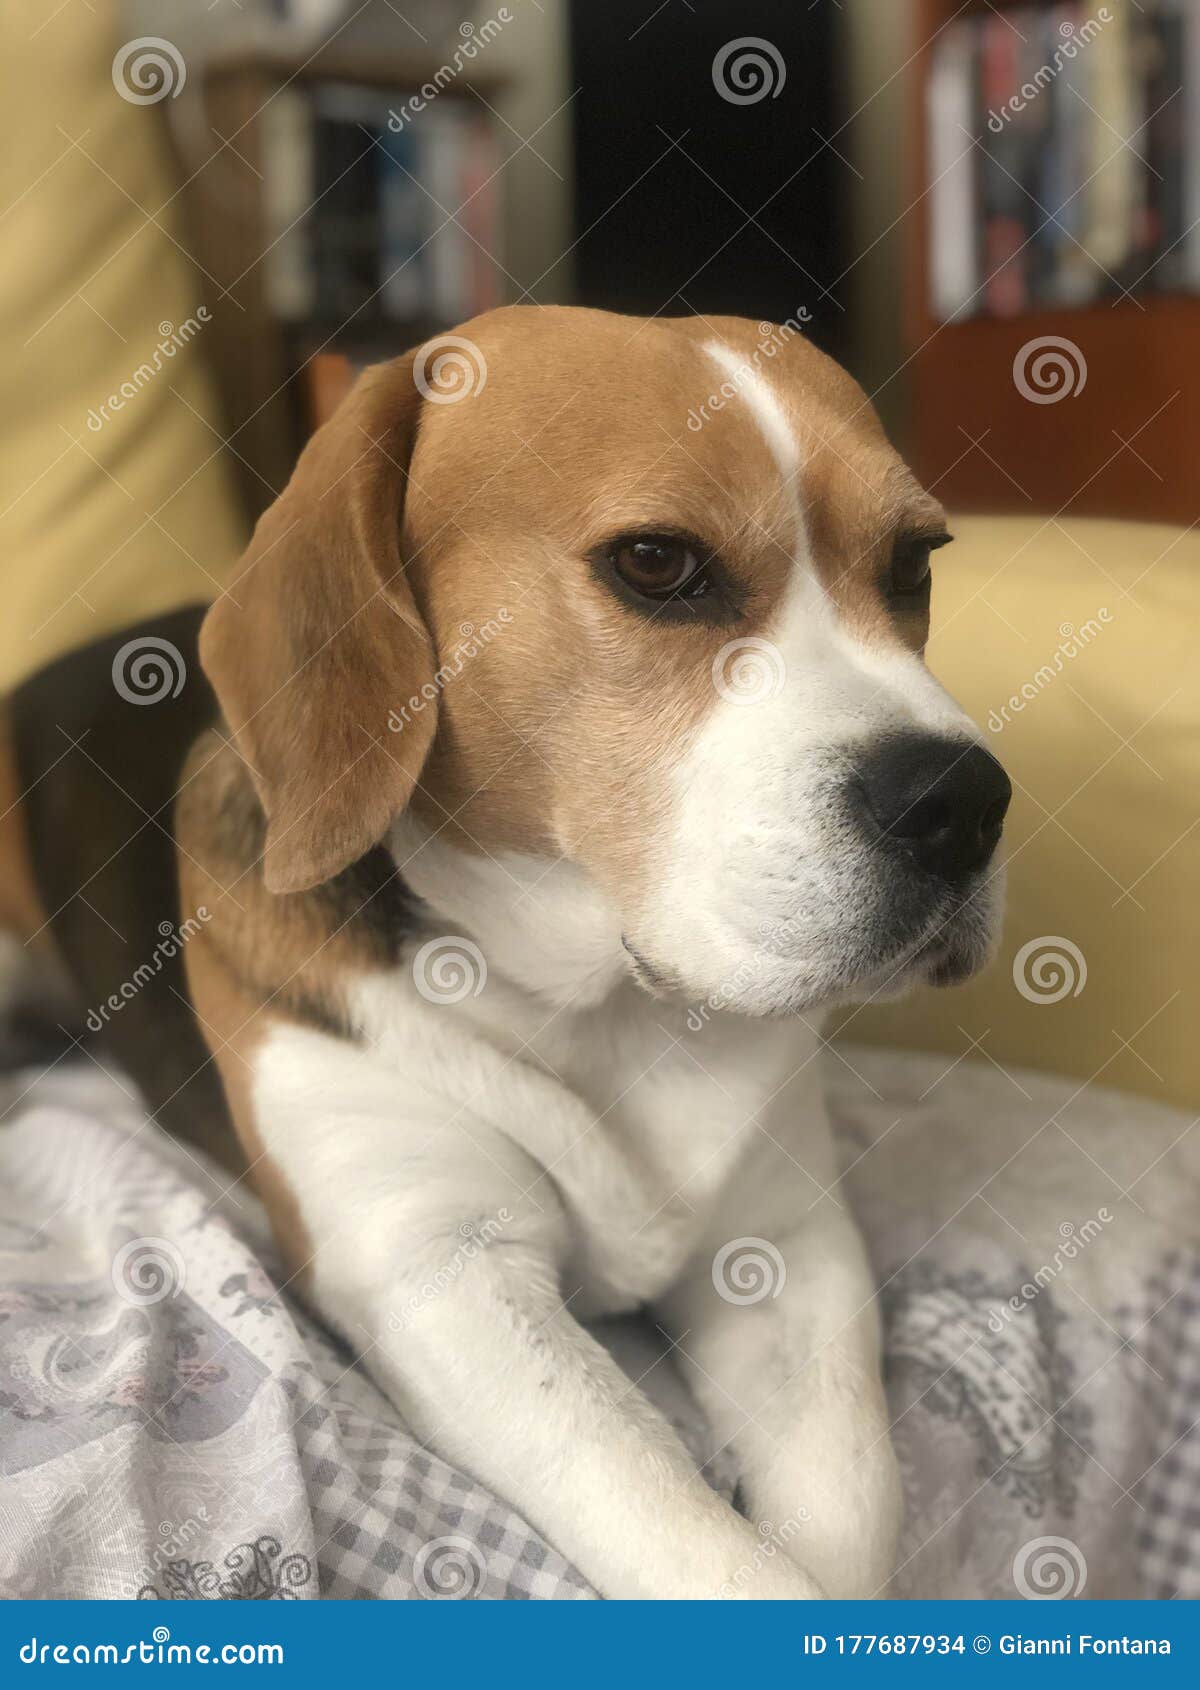 Eye Stock Photo Image Of Snoopy Cute Beagle